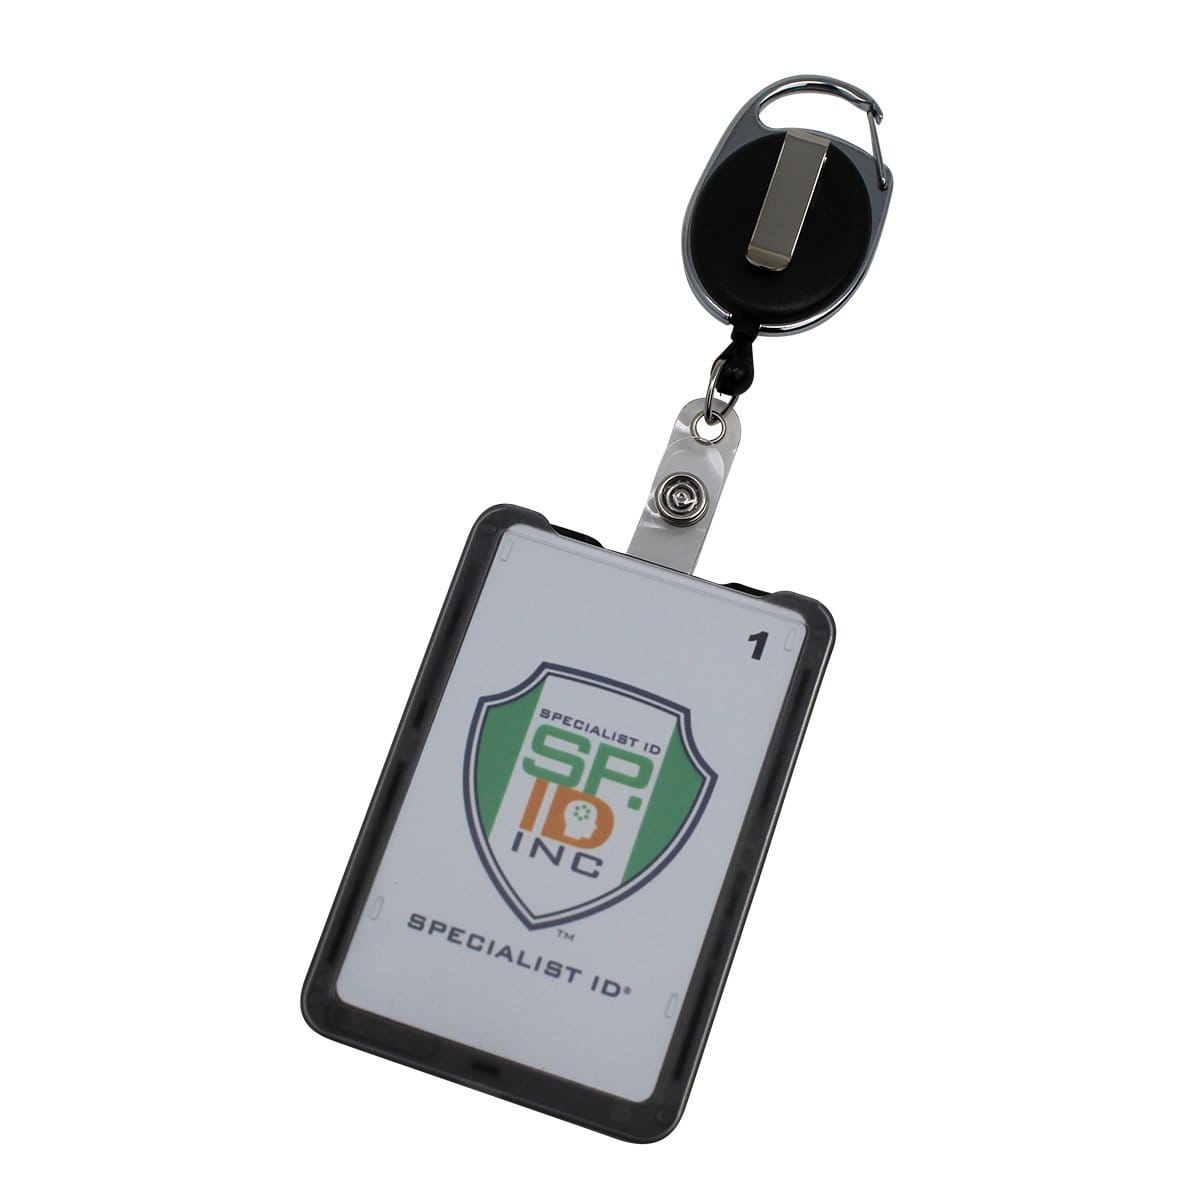 Hard Plastic 3 Card Badge Holder with Badge Reel